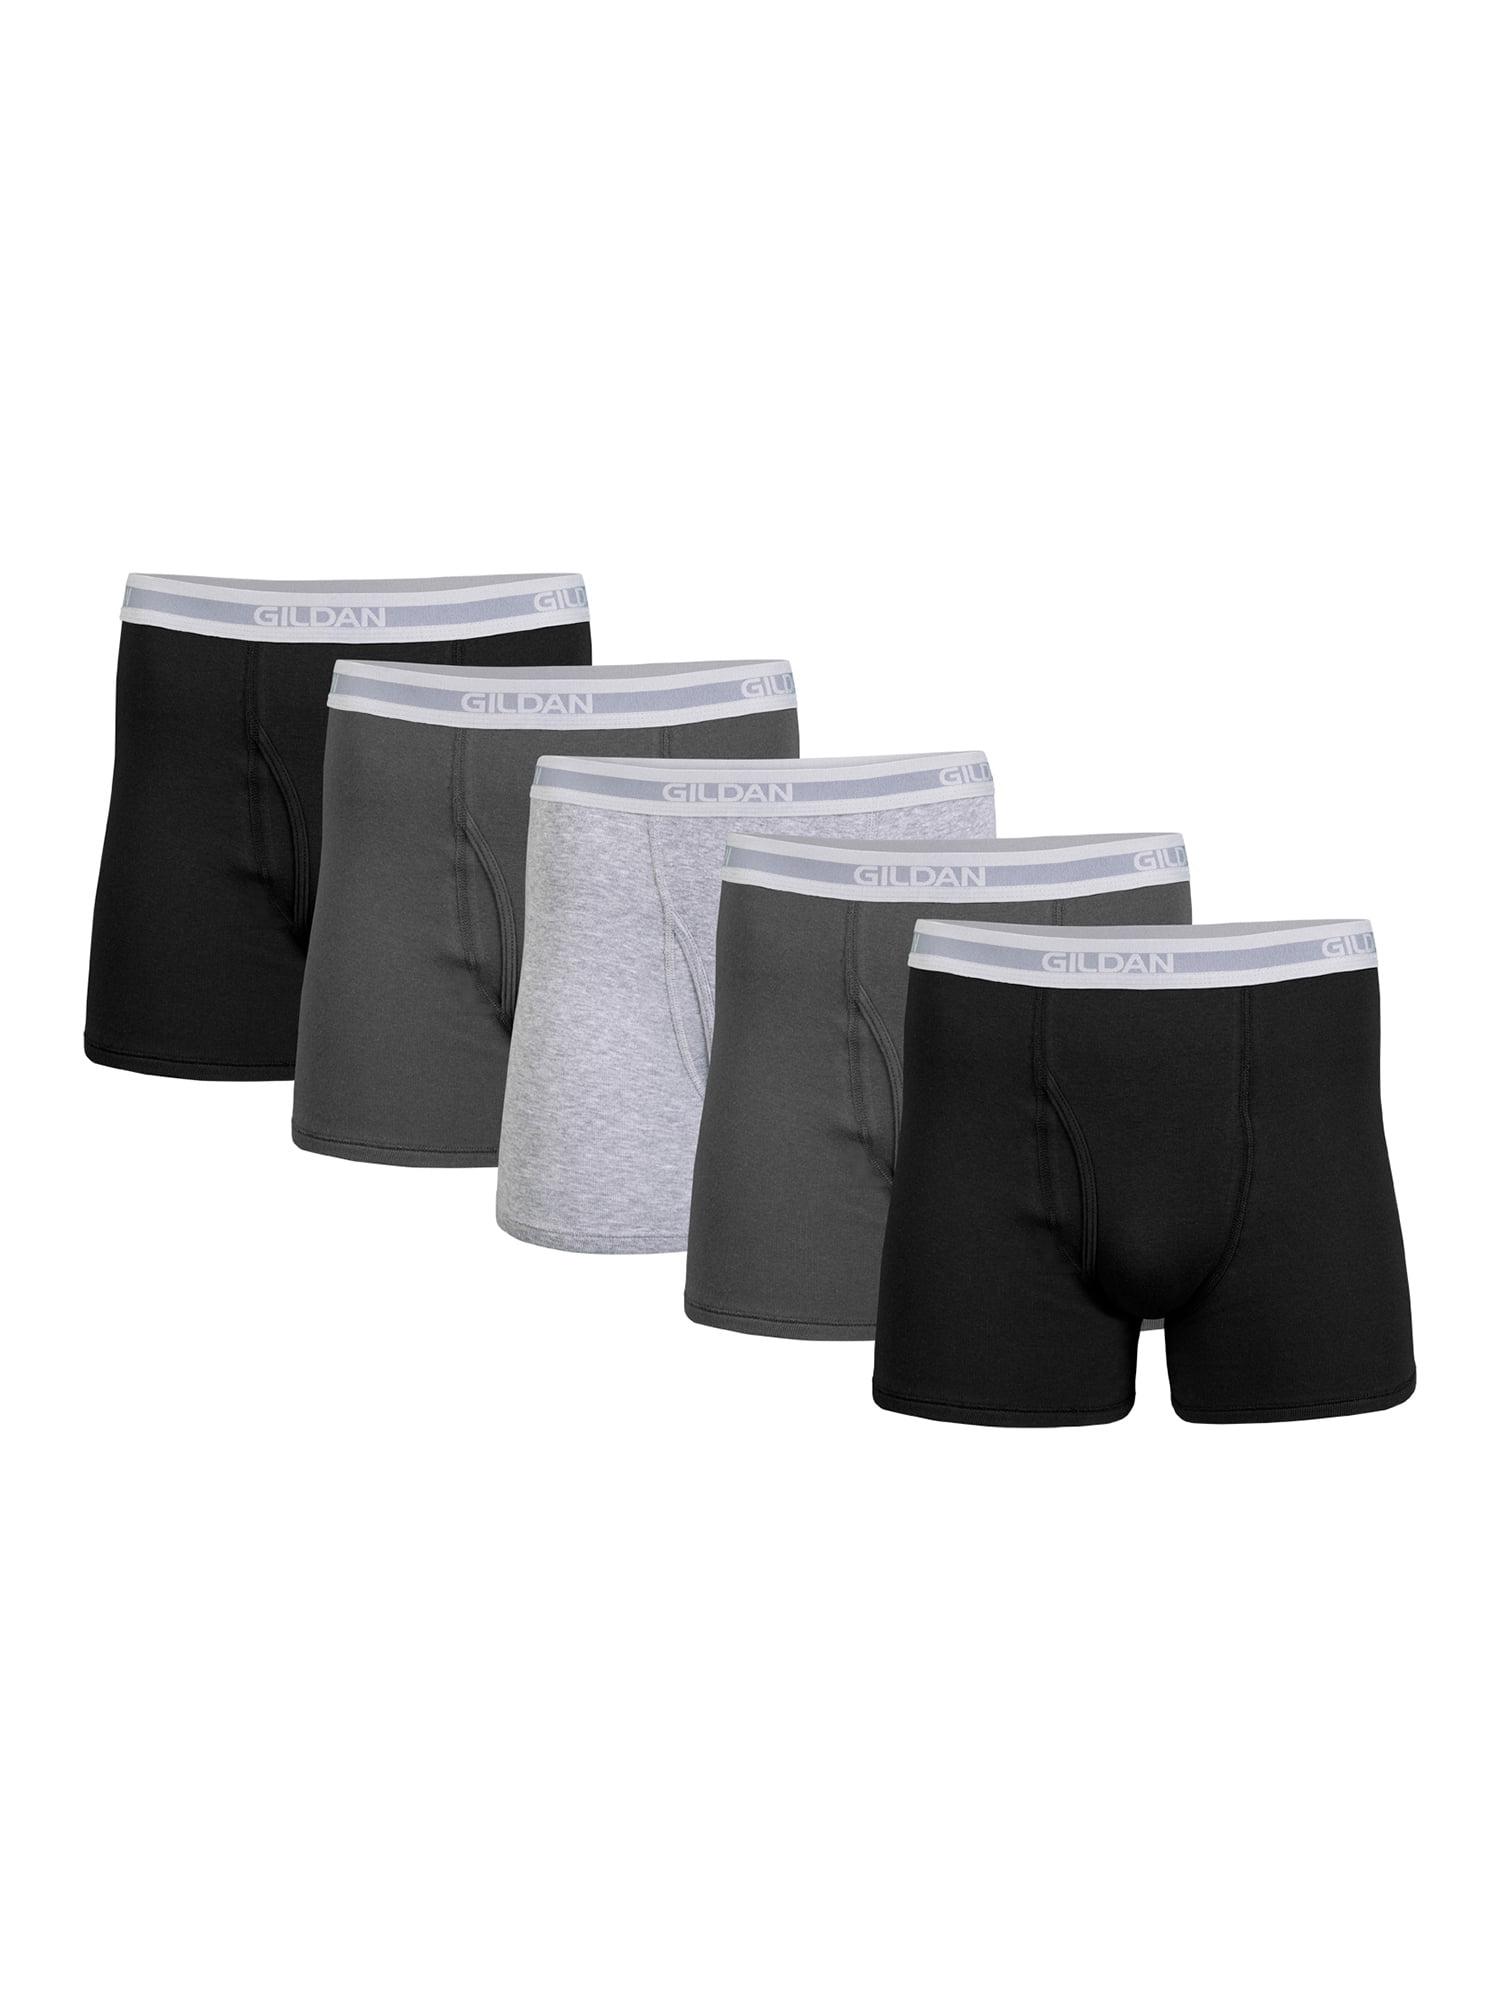 Gildan Underwear Review: Your Next Favorite Pair of Boxer Briefs?